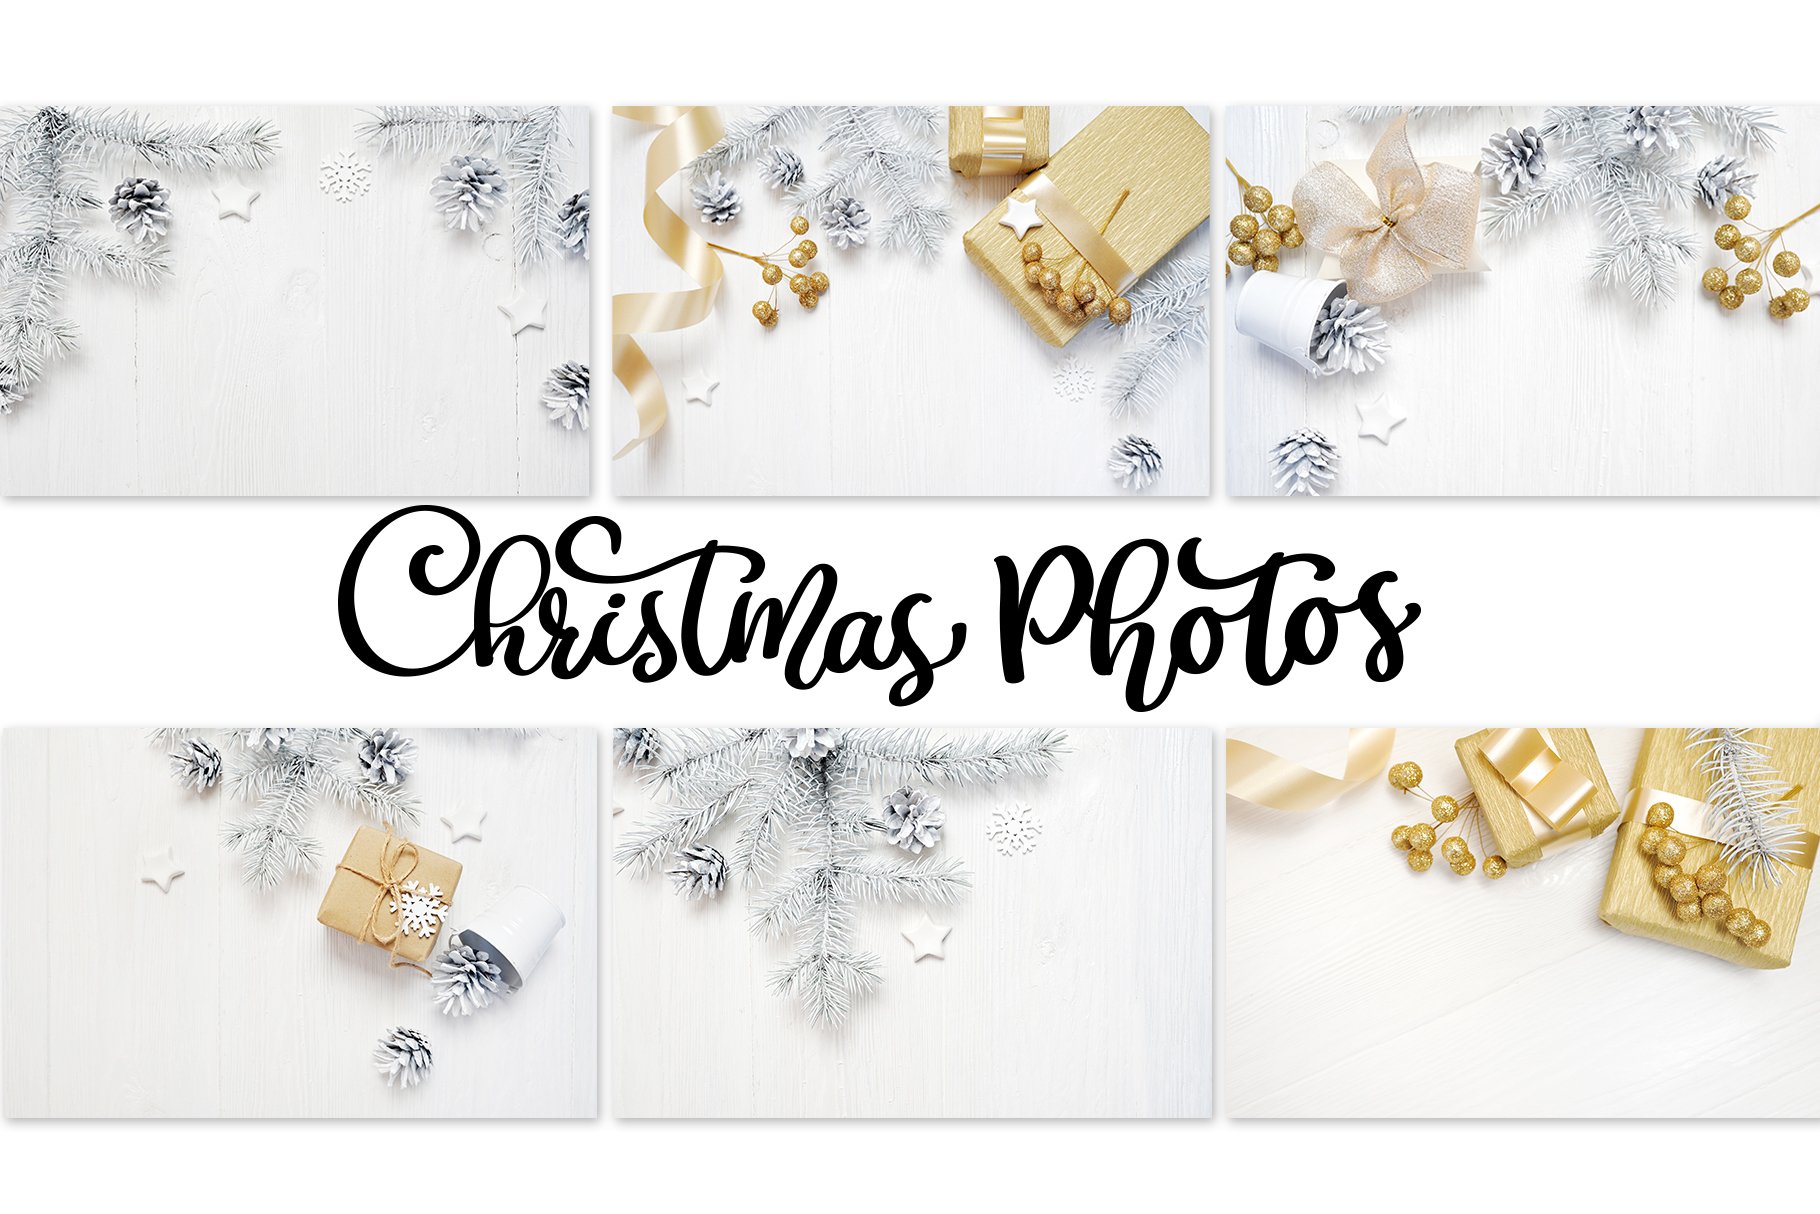 Prints on a delicate Christmas theme.